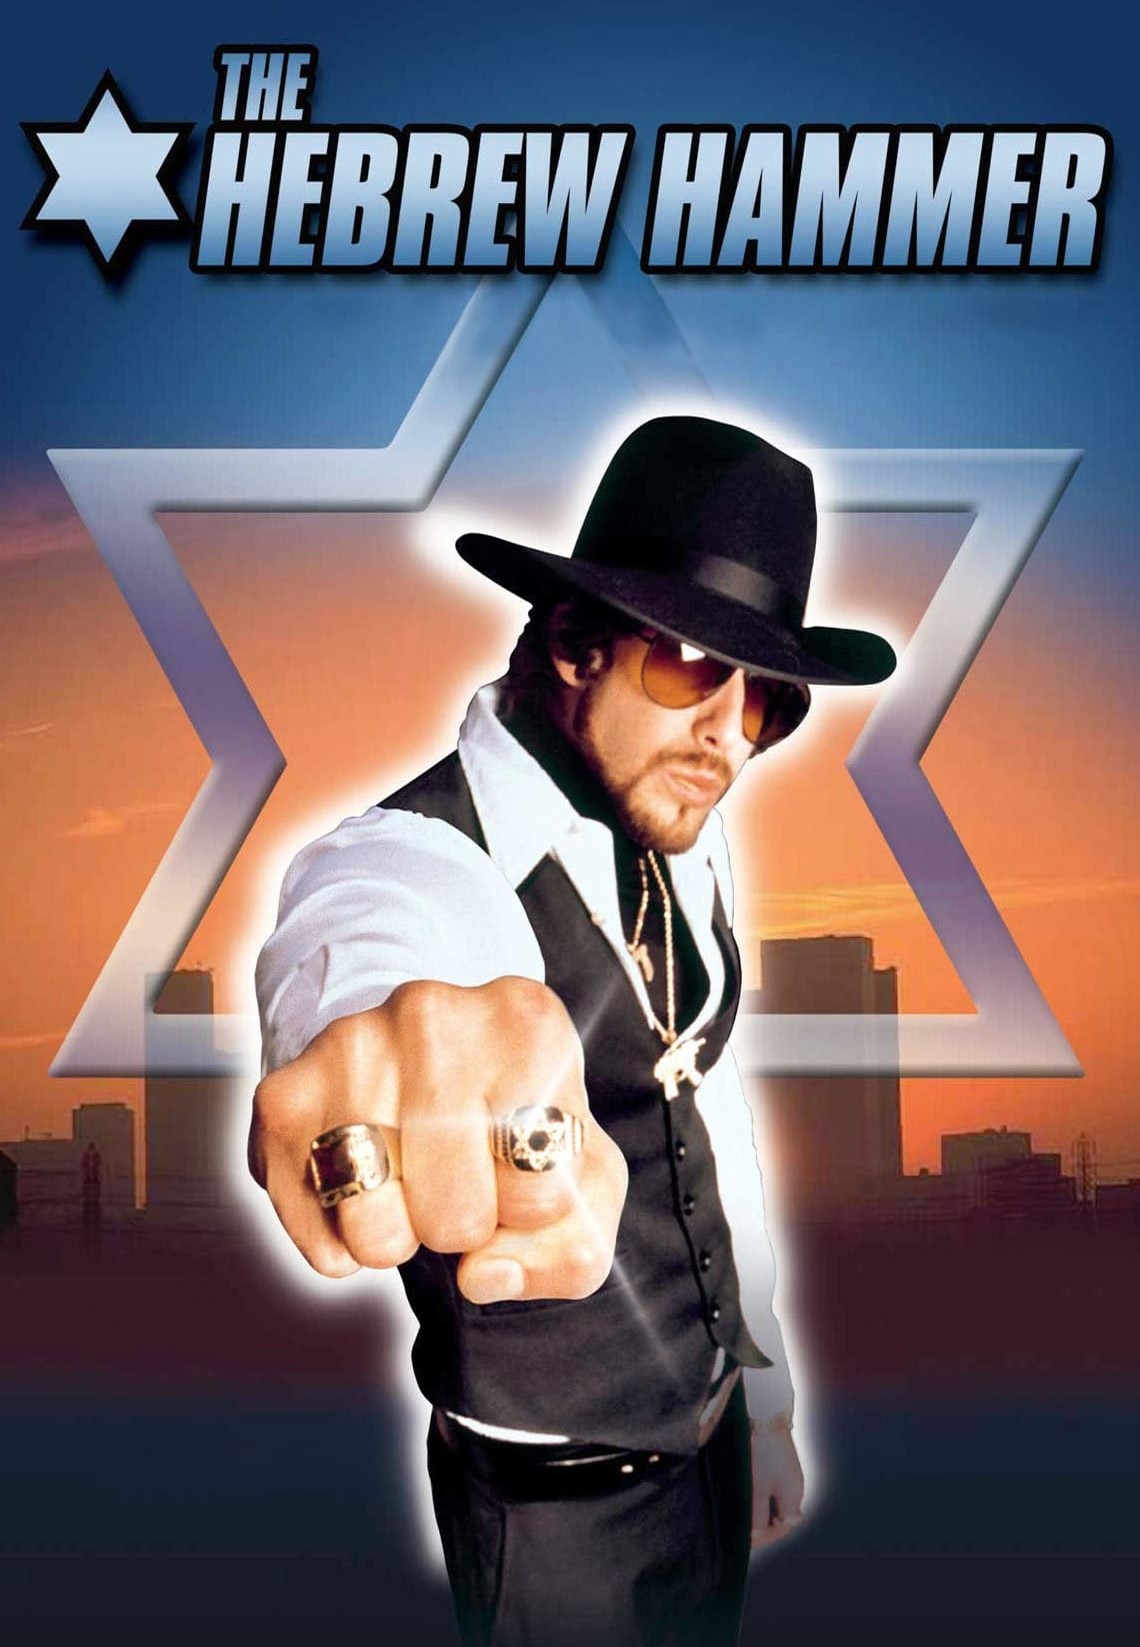 The Hebrew Hammer (2003) Screenshot 4 